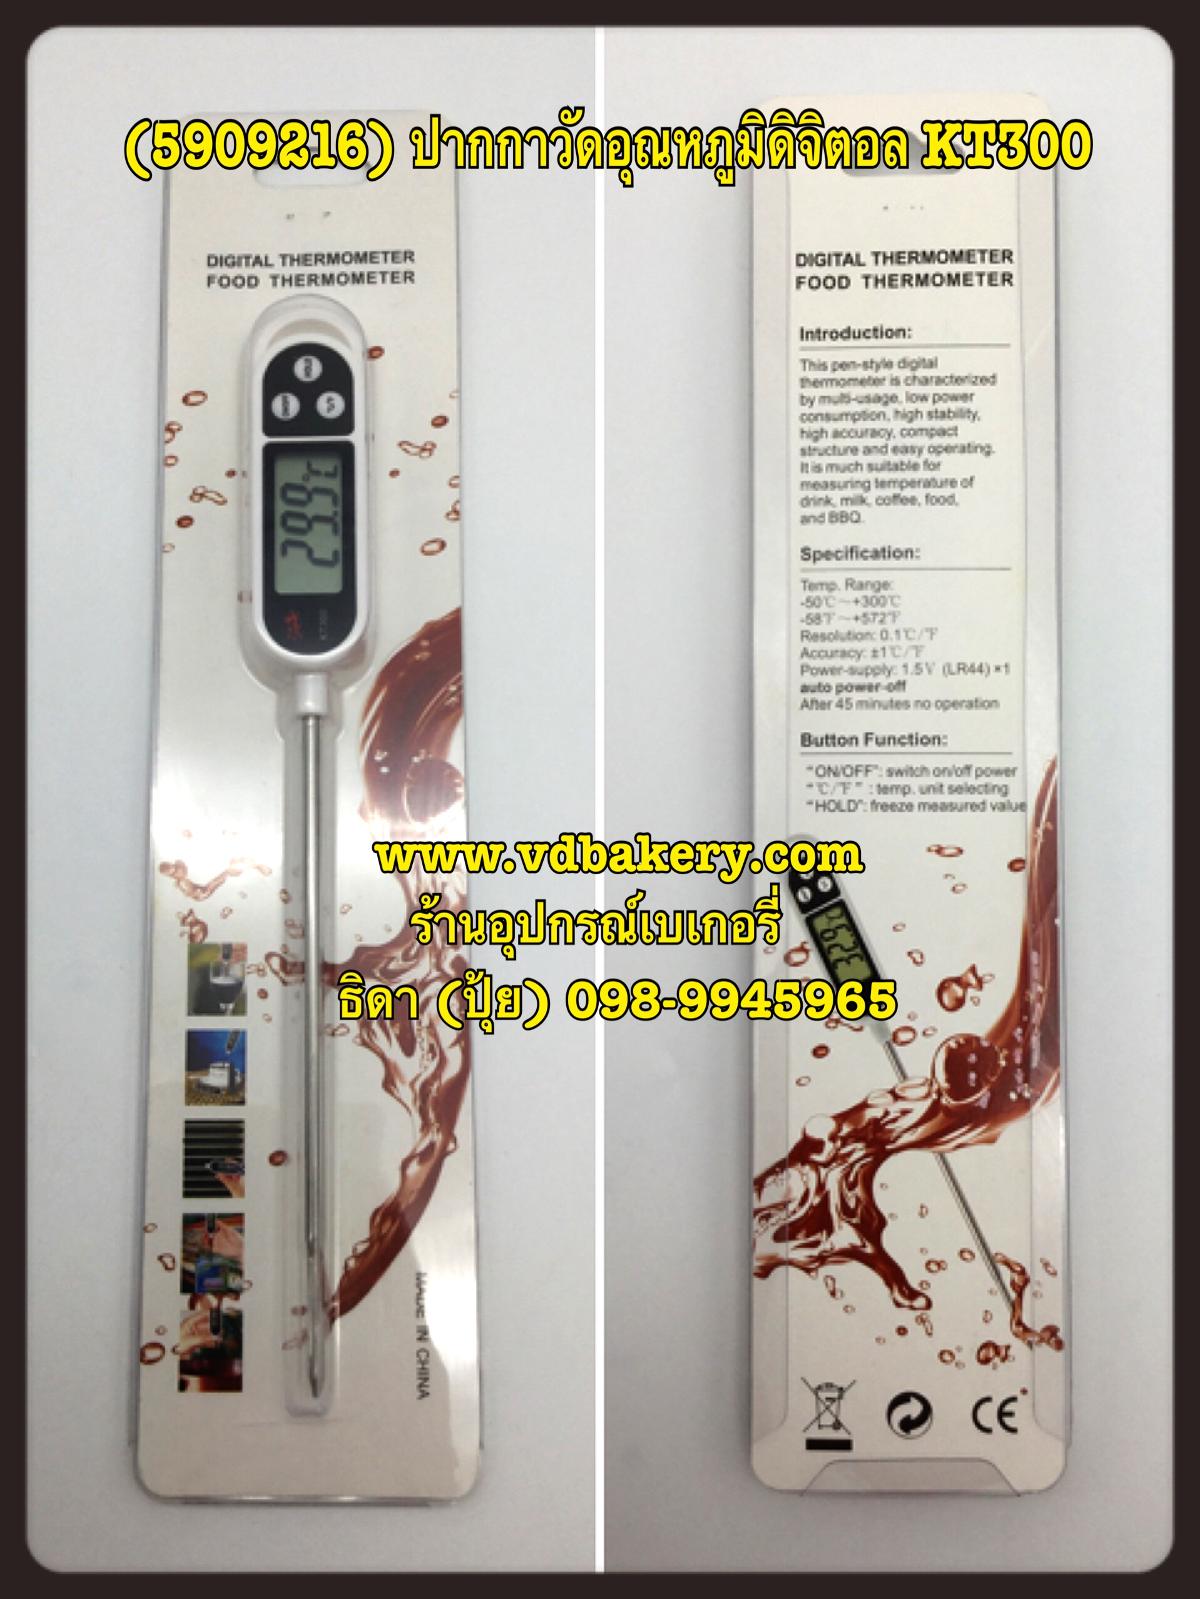 (5909216) Digital Thermometer แท่งวัดอุณหภูมิดิจิตอล KT-300 (NO.9216)